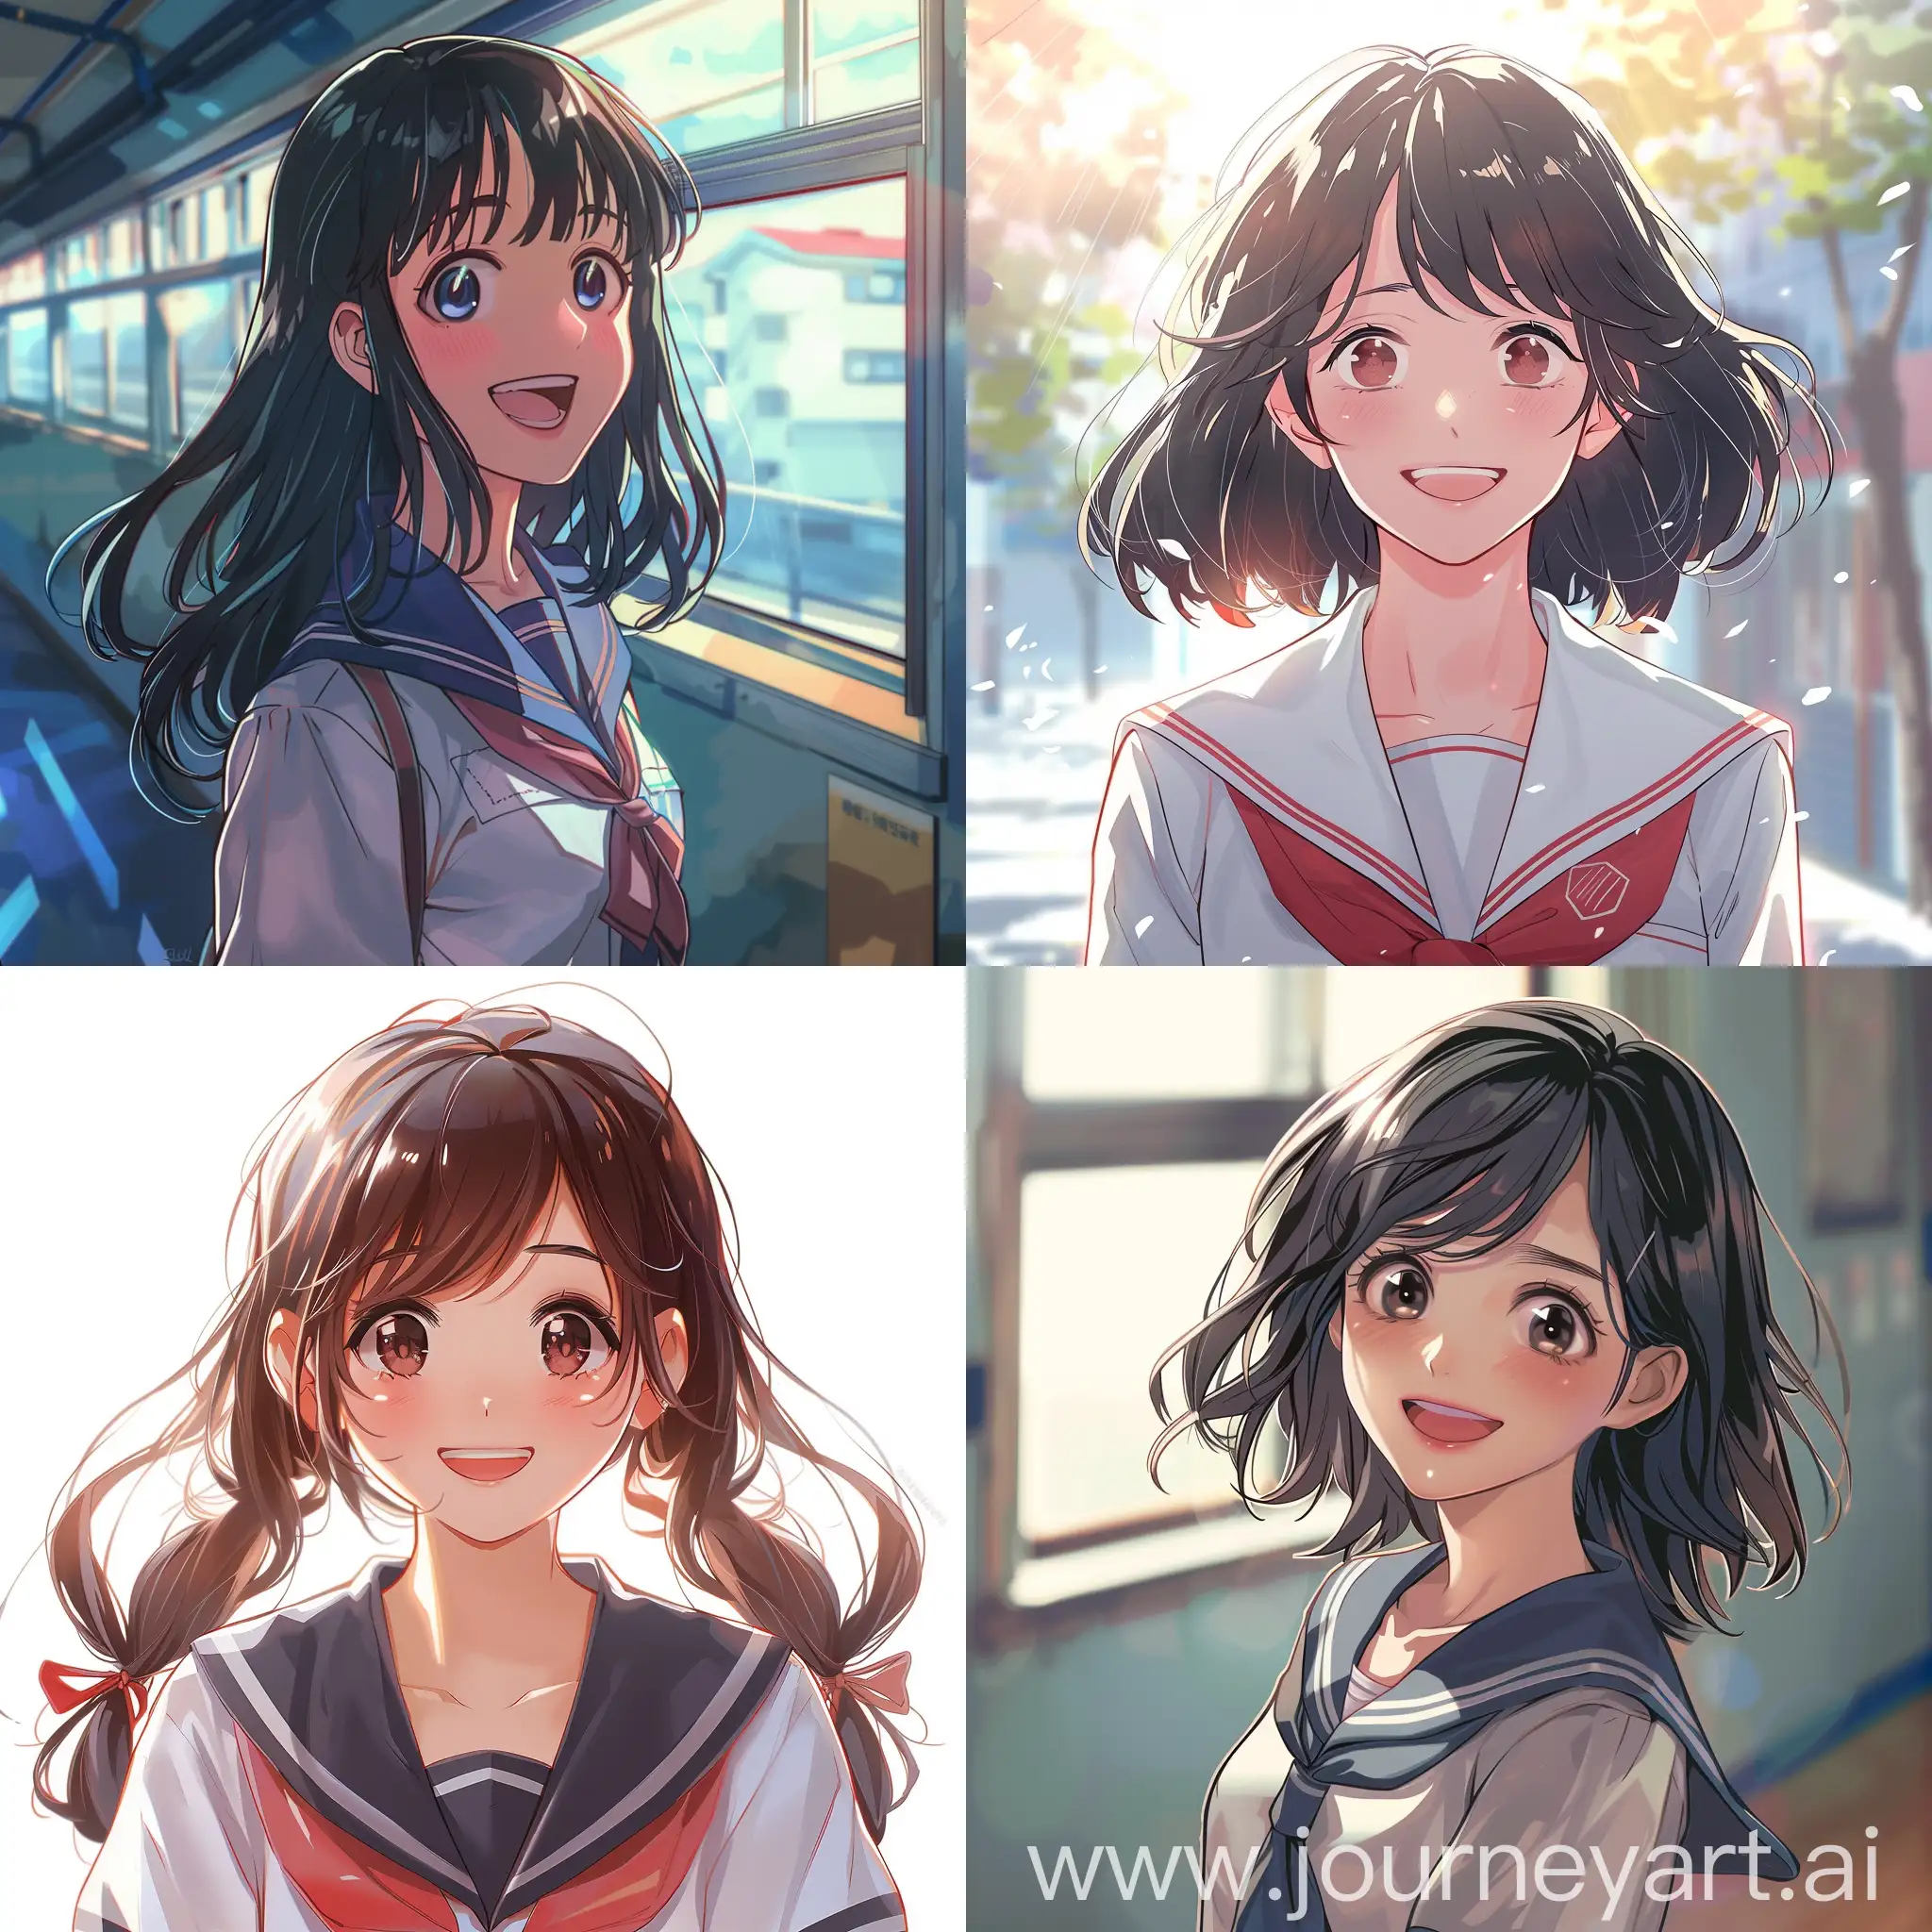 Anime-Student-Girl-in-Vibrant-School-Uniform-Smiling